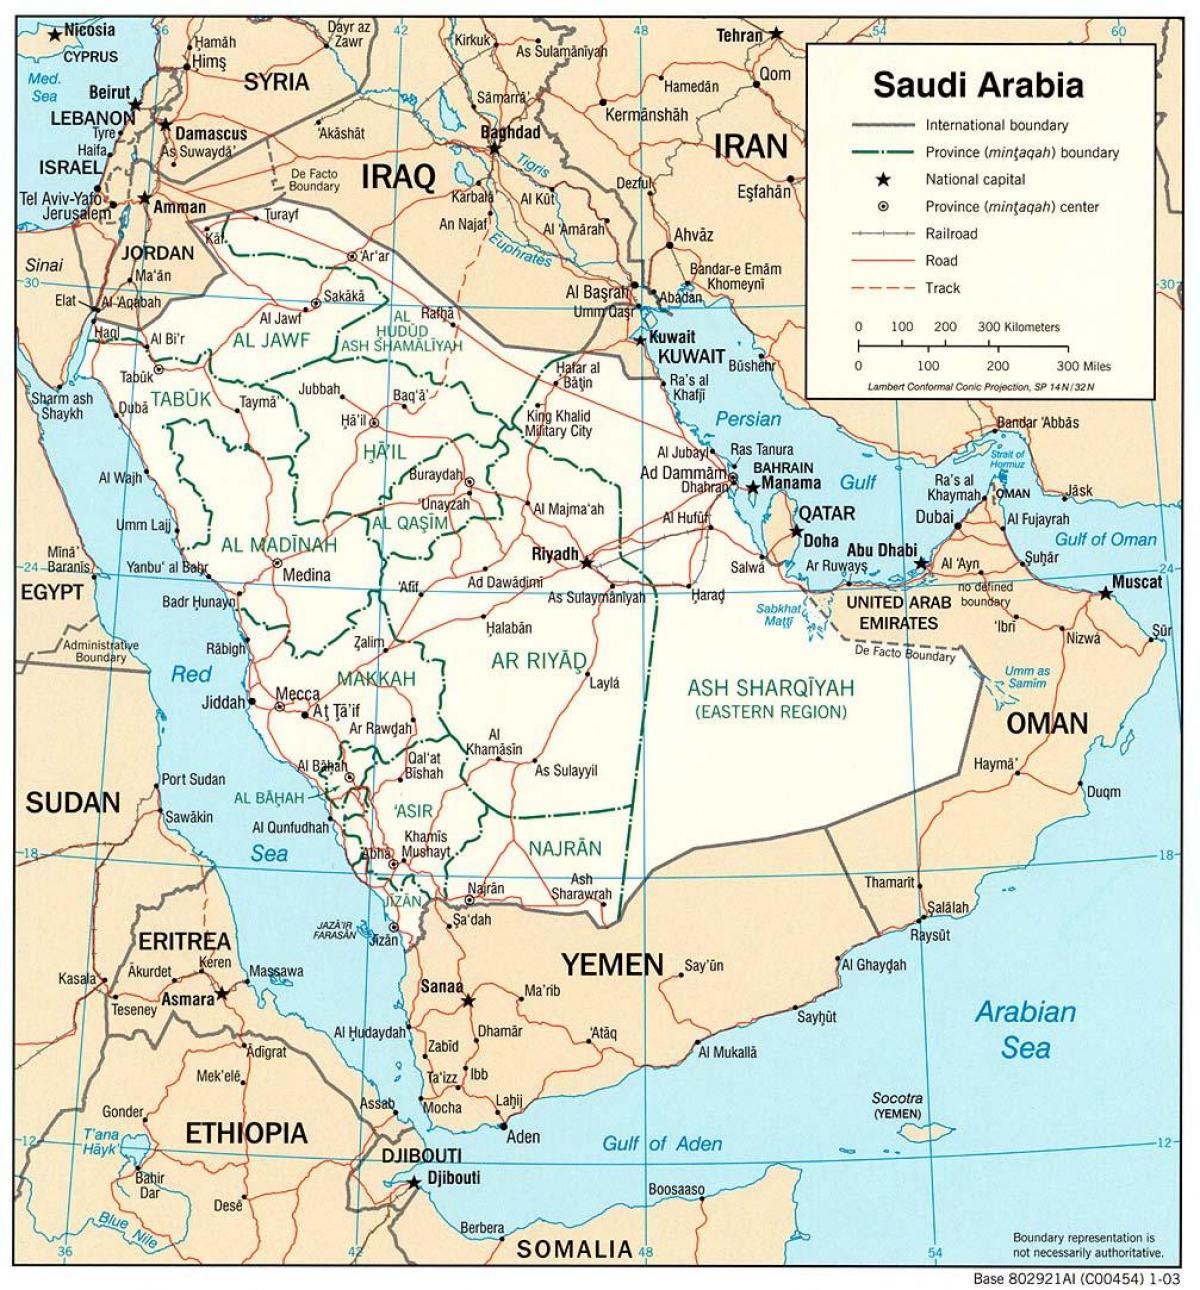 Saudi-Arabia veier kart